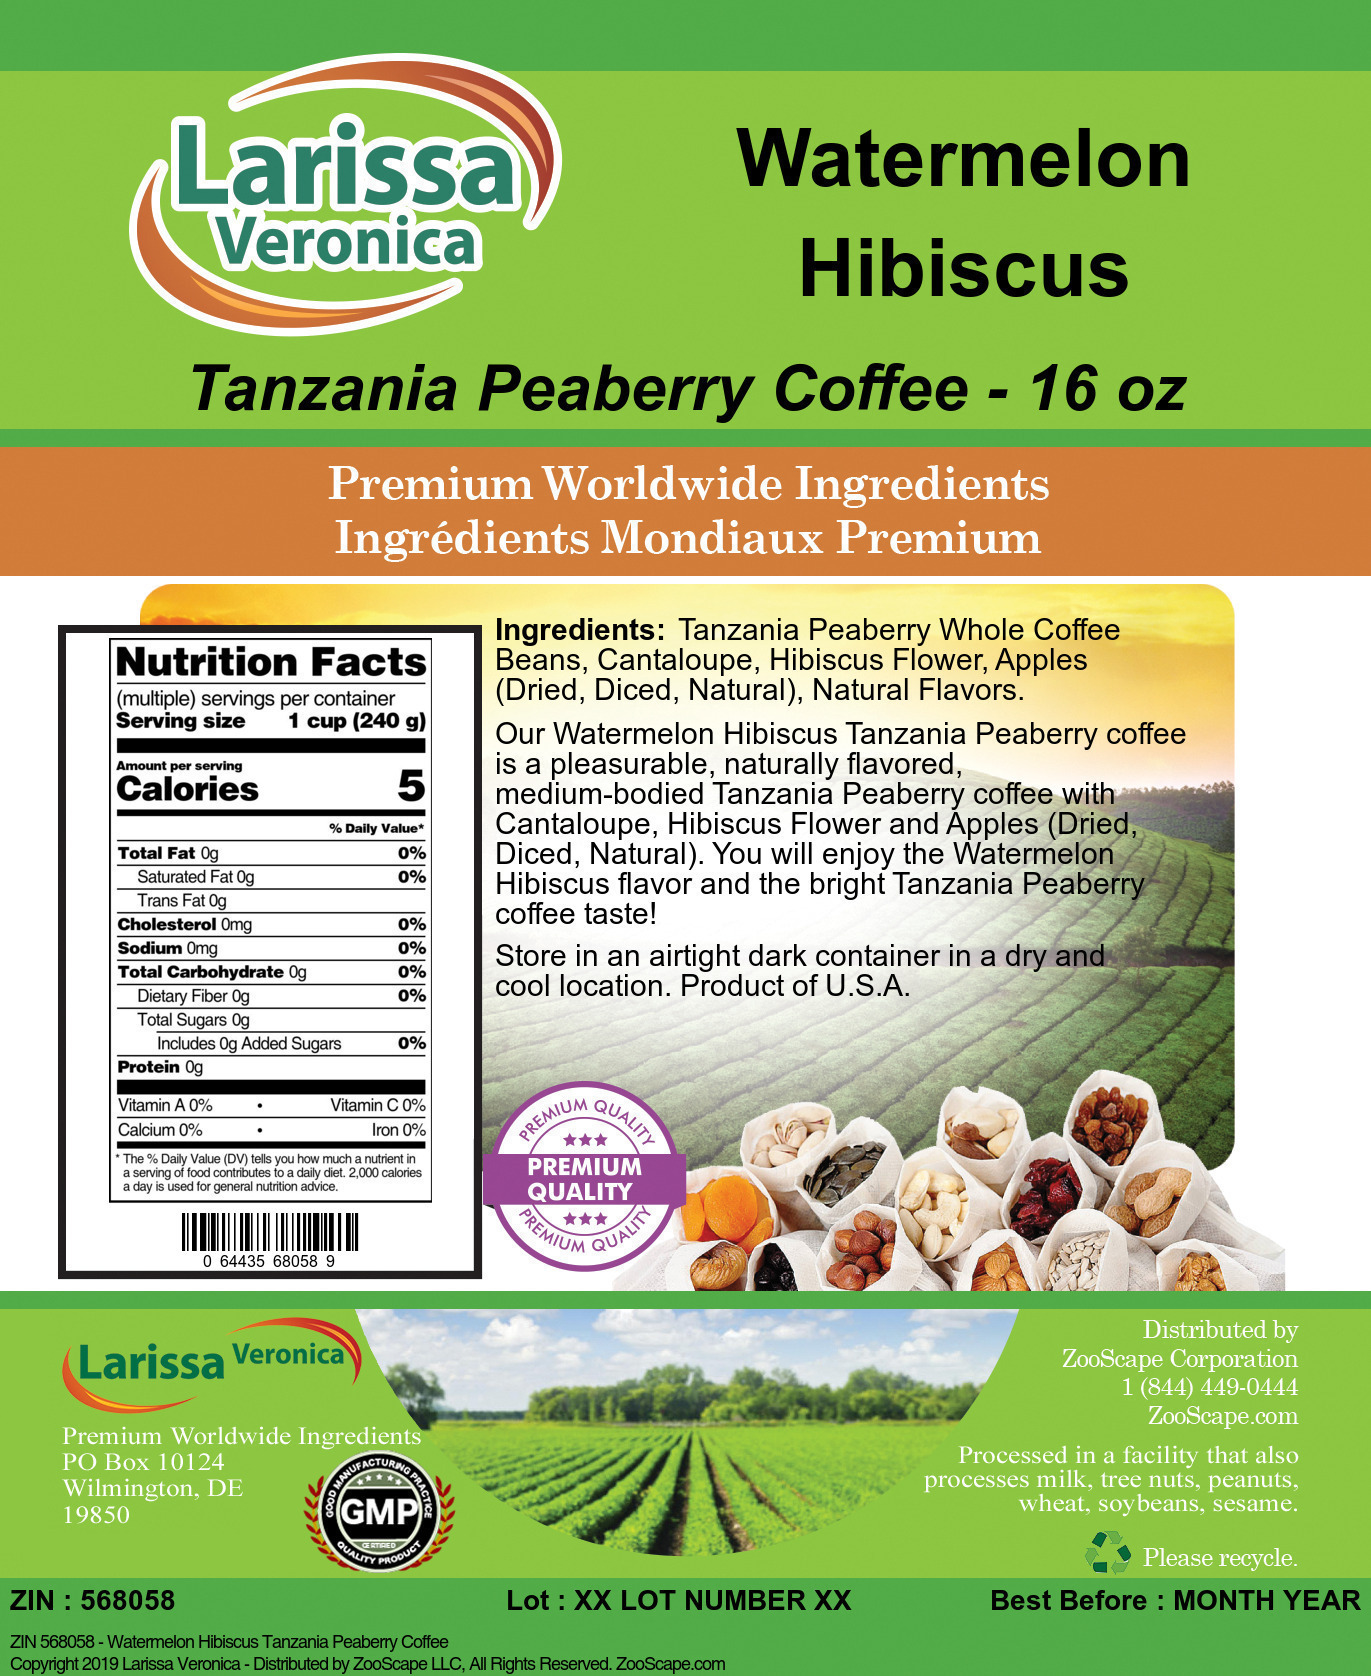 Watermelon Hibiscus Tanzania Peaberry Coffee - Label